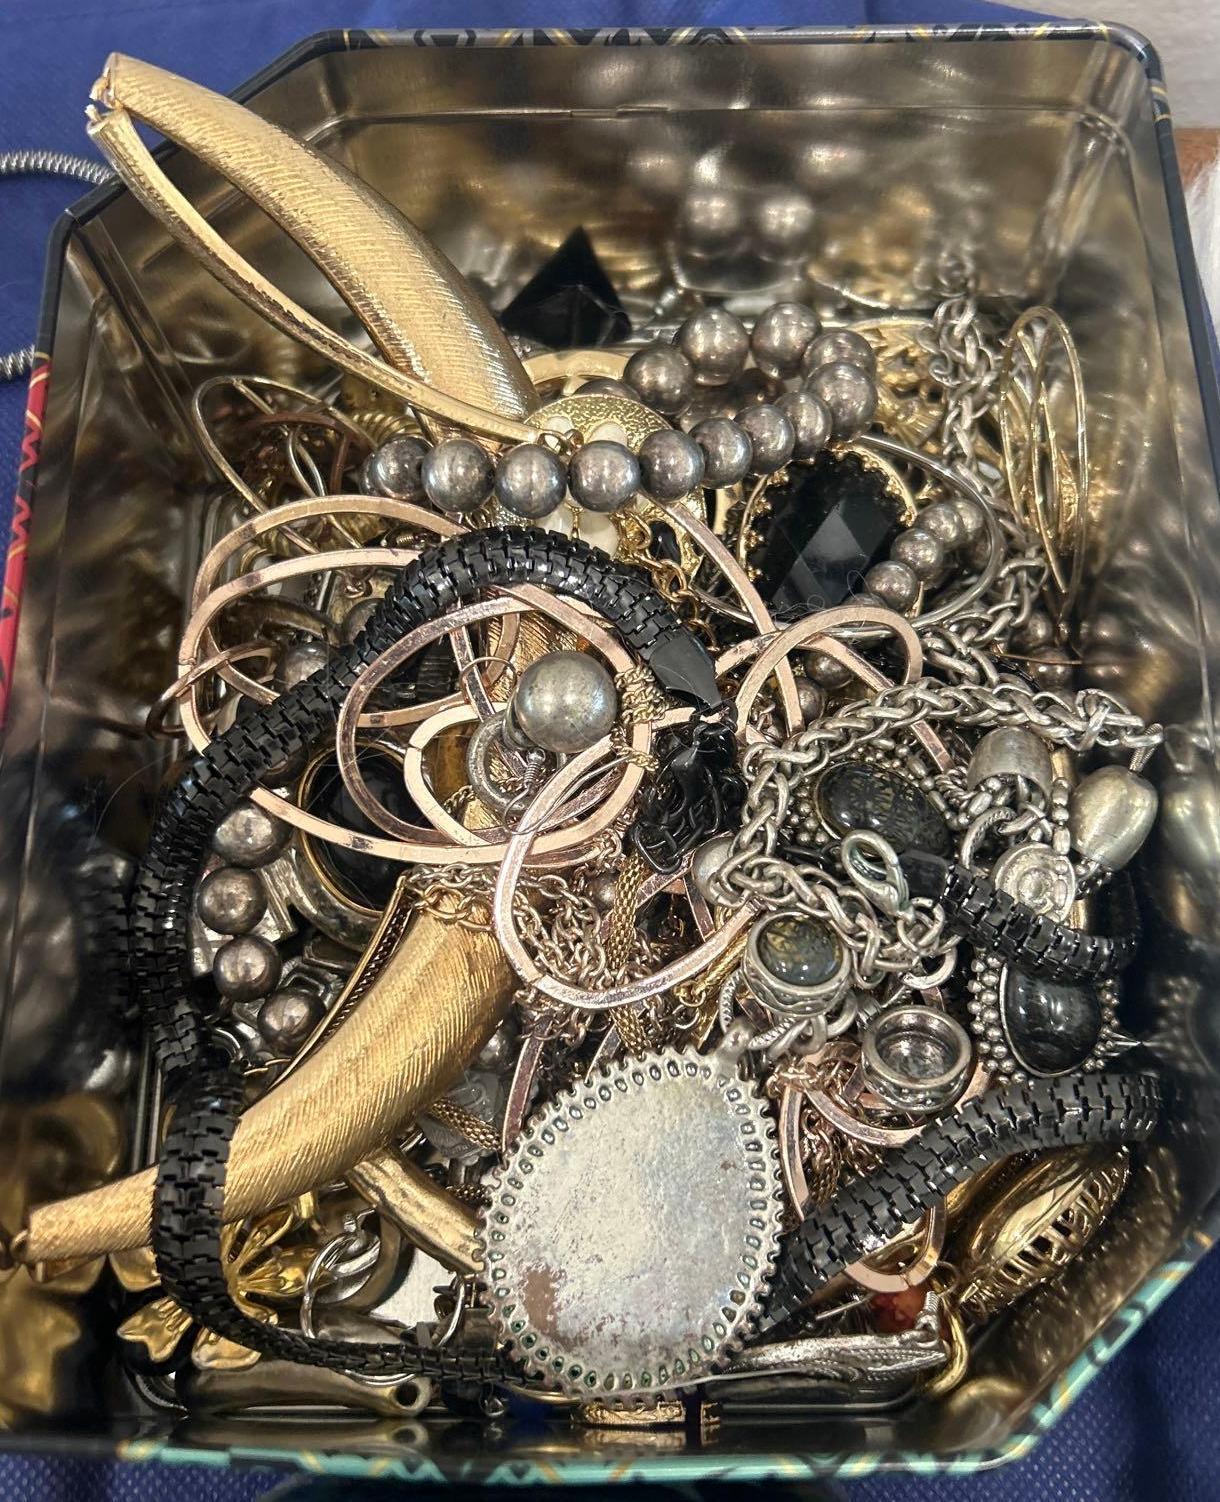 Variety of bracelets & earrings